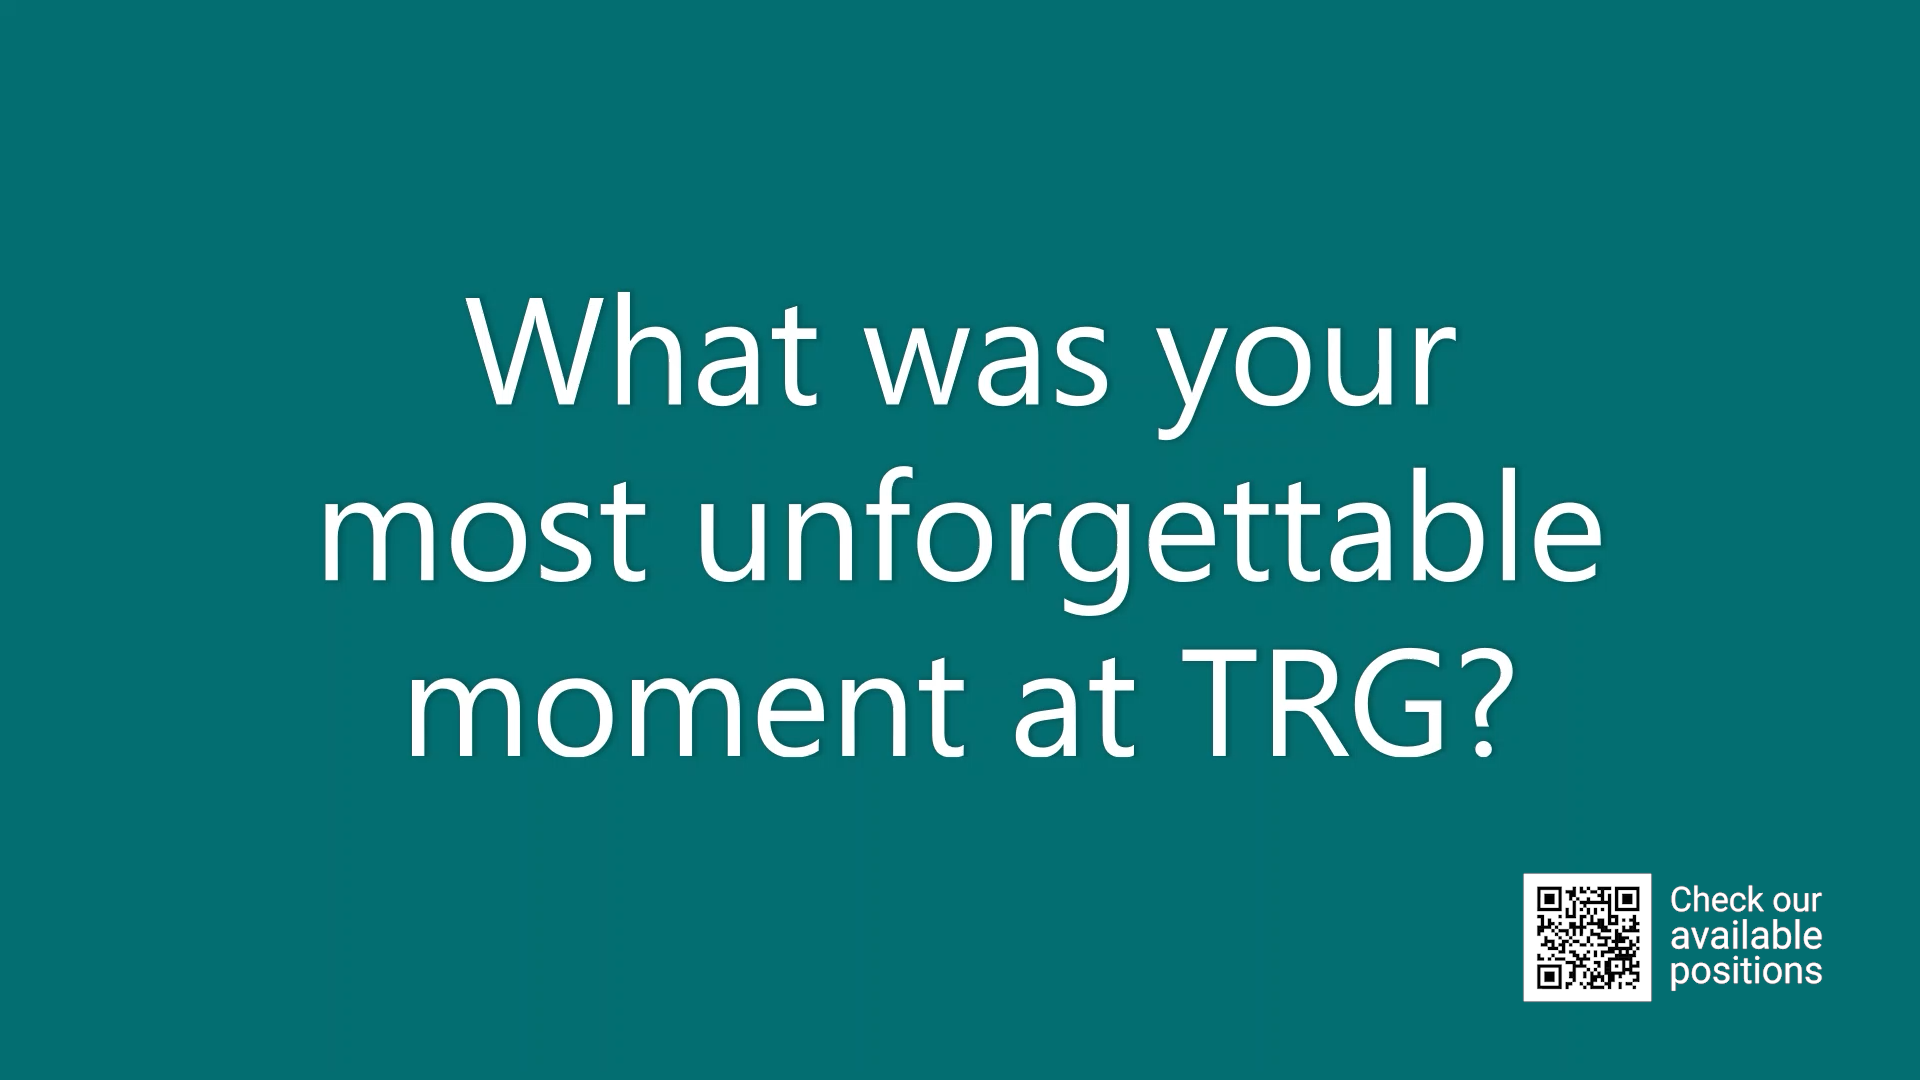 Internship testimonials - Episode 10: Your most unforgettable moment at TRG